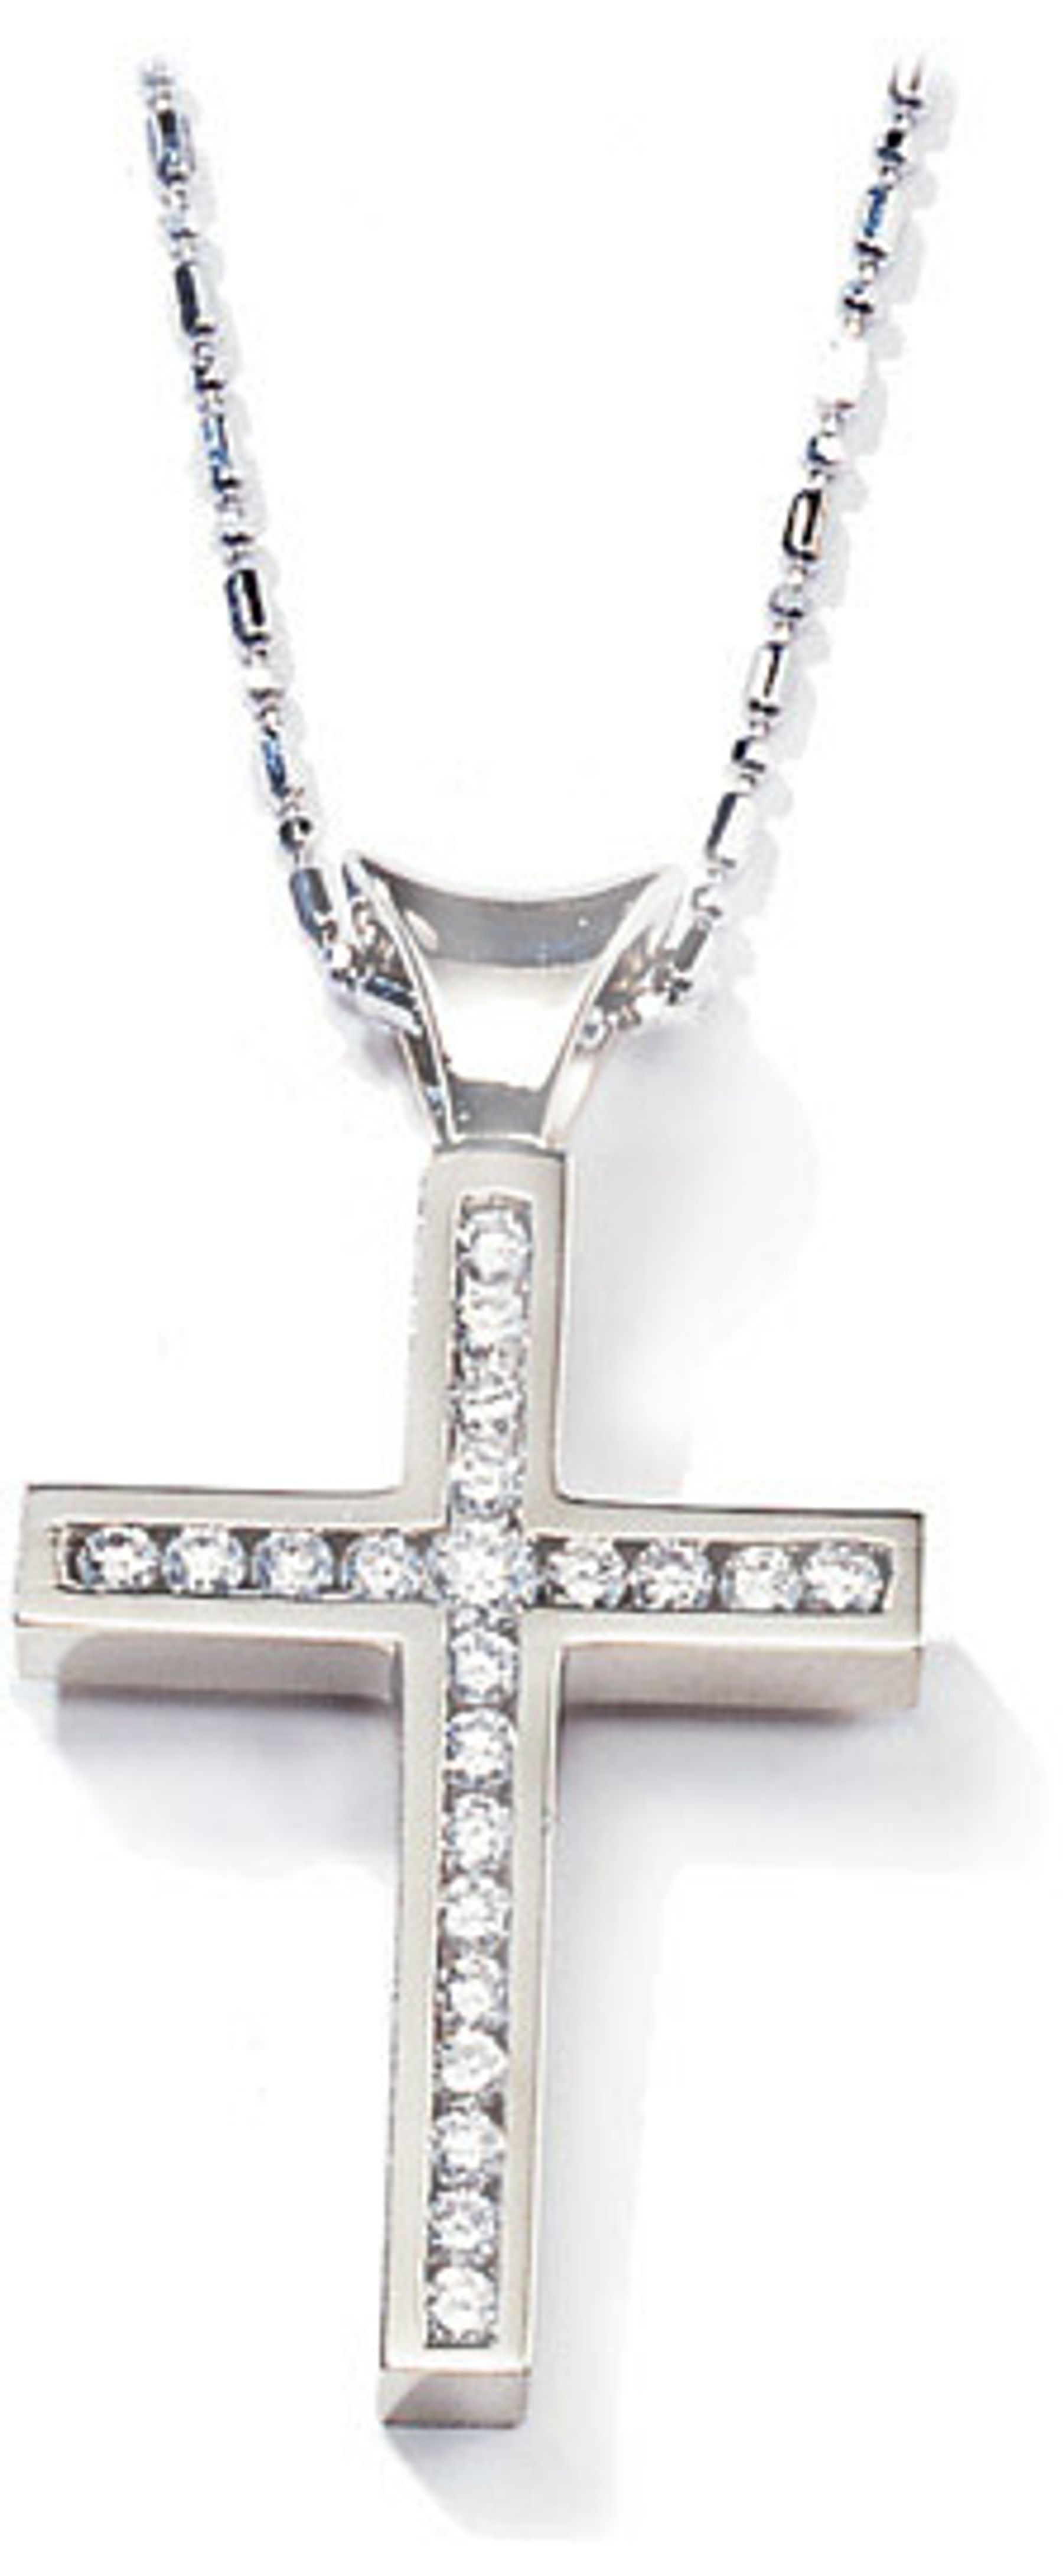 Platinum diamond cross pendant with platinum chain